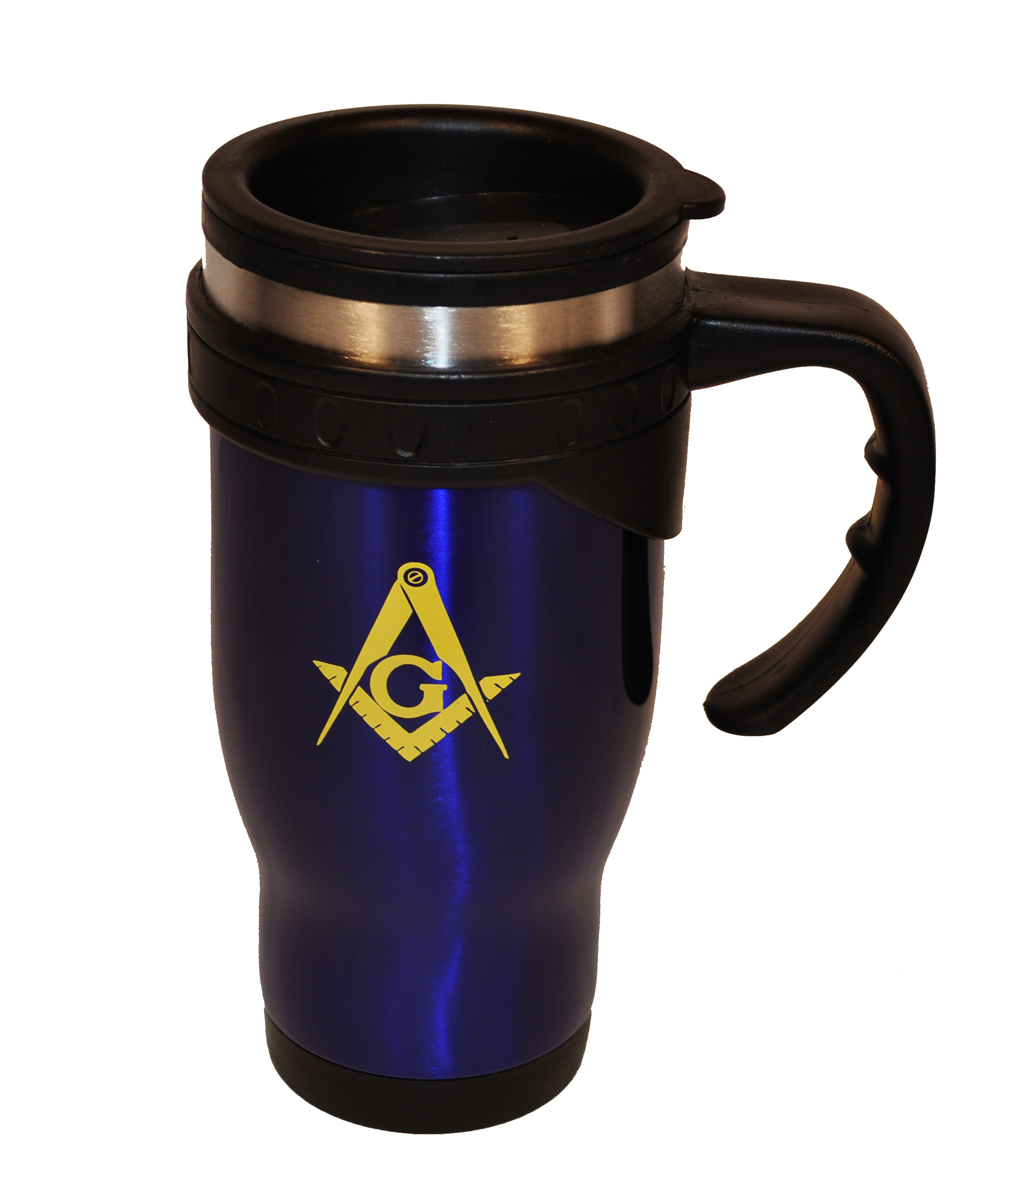 Masonic travel mug